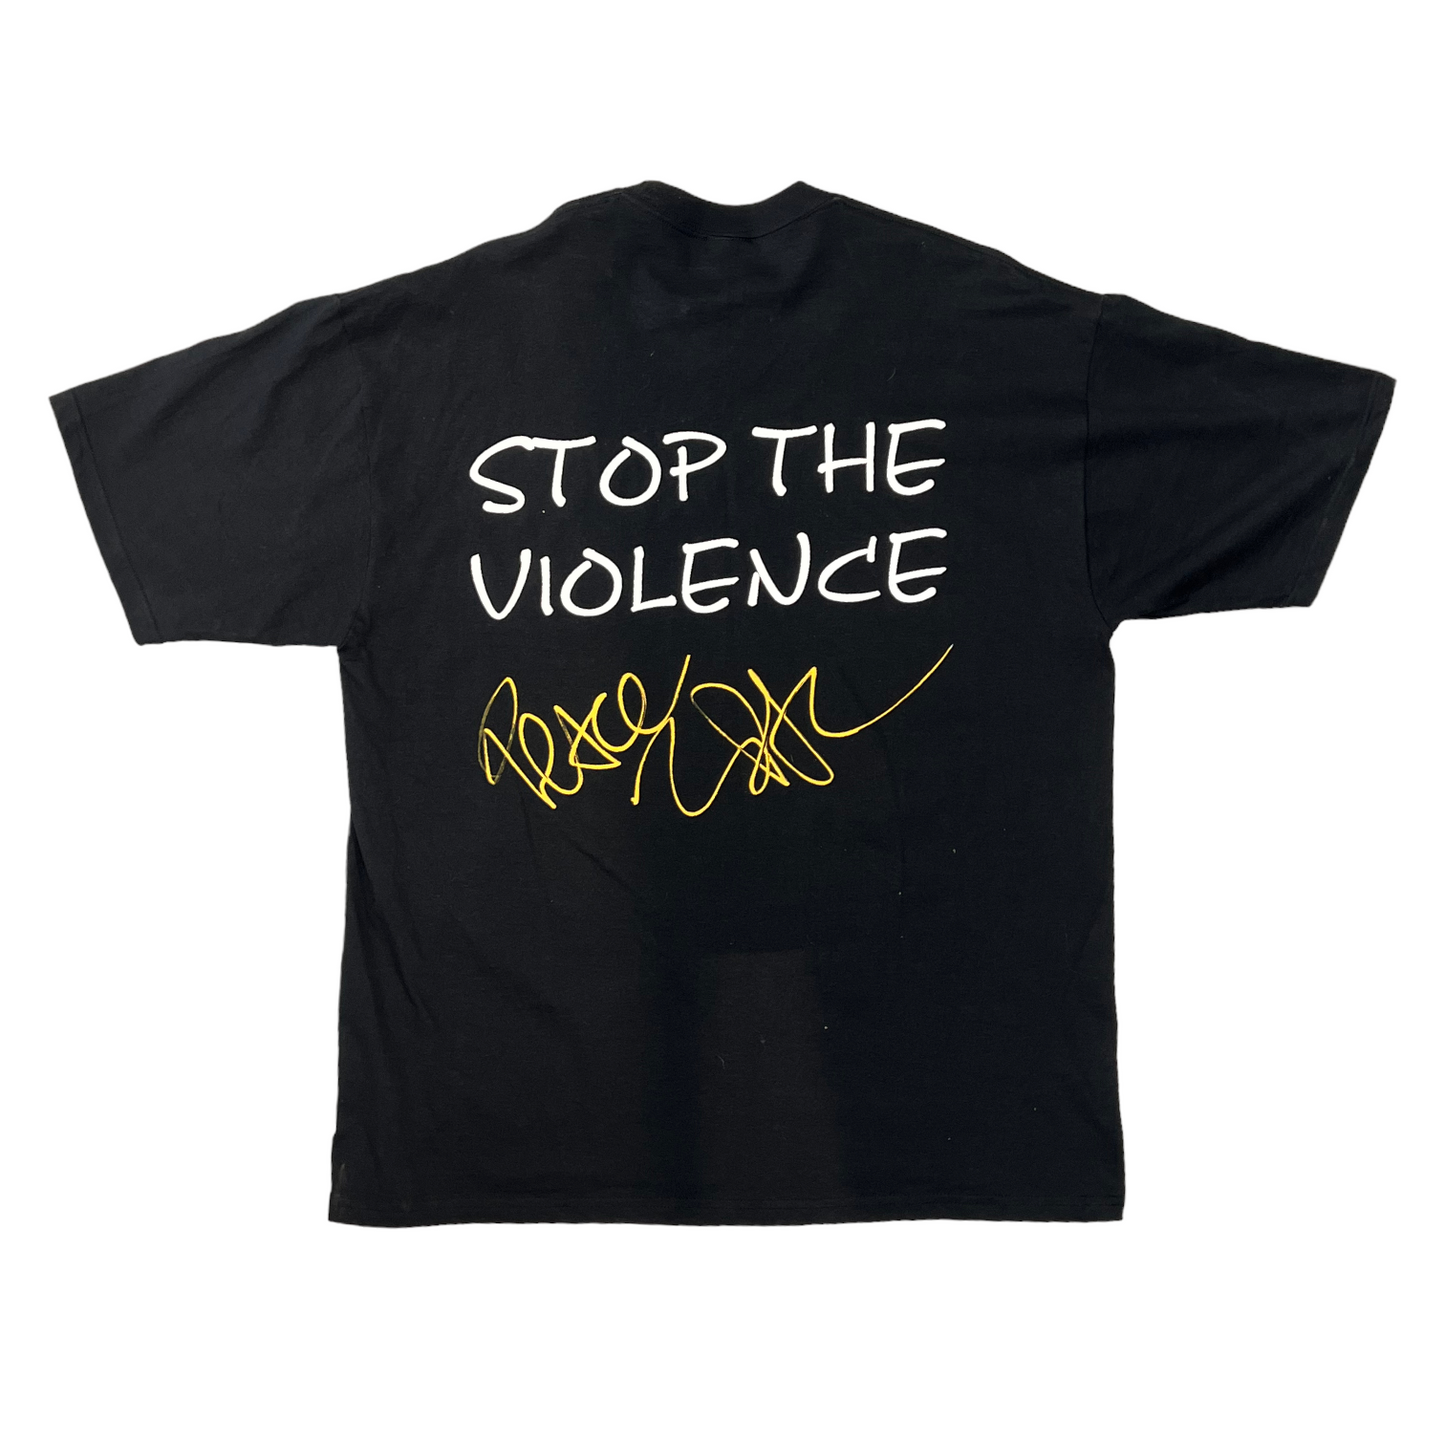 1997 Tupac “Stop the Violence” rap tee